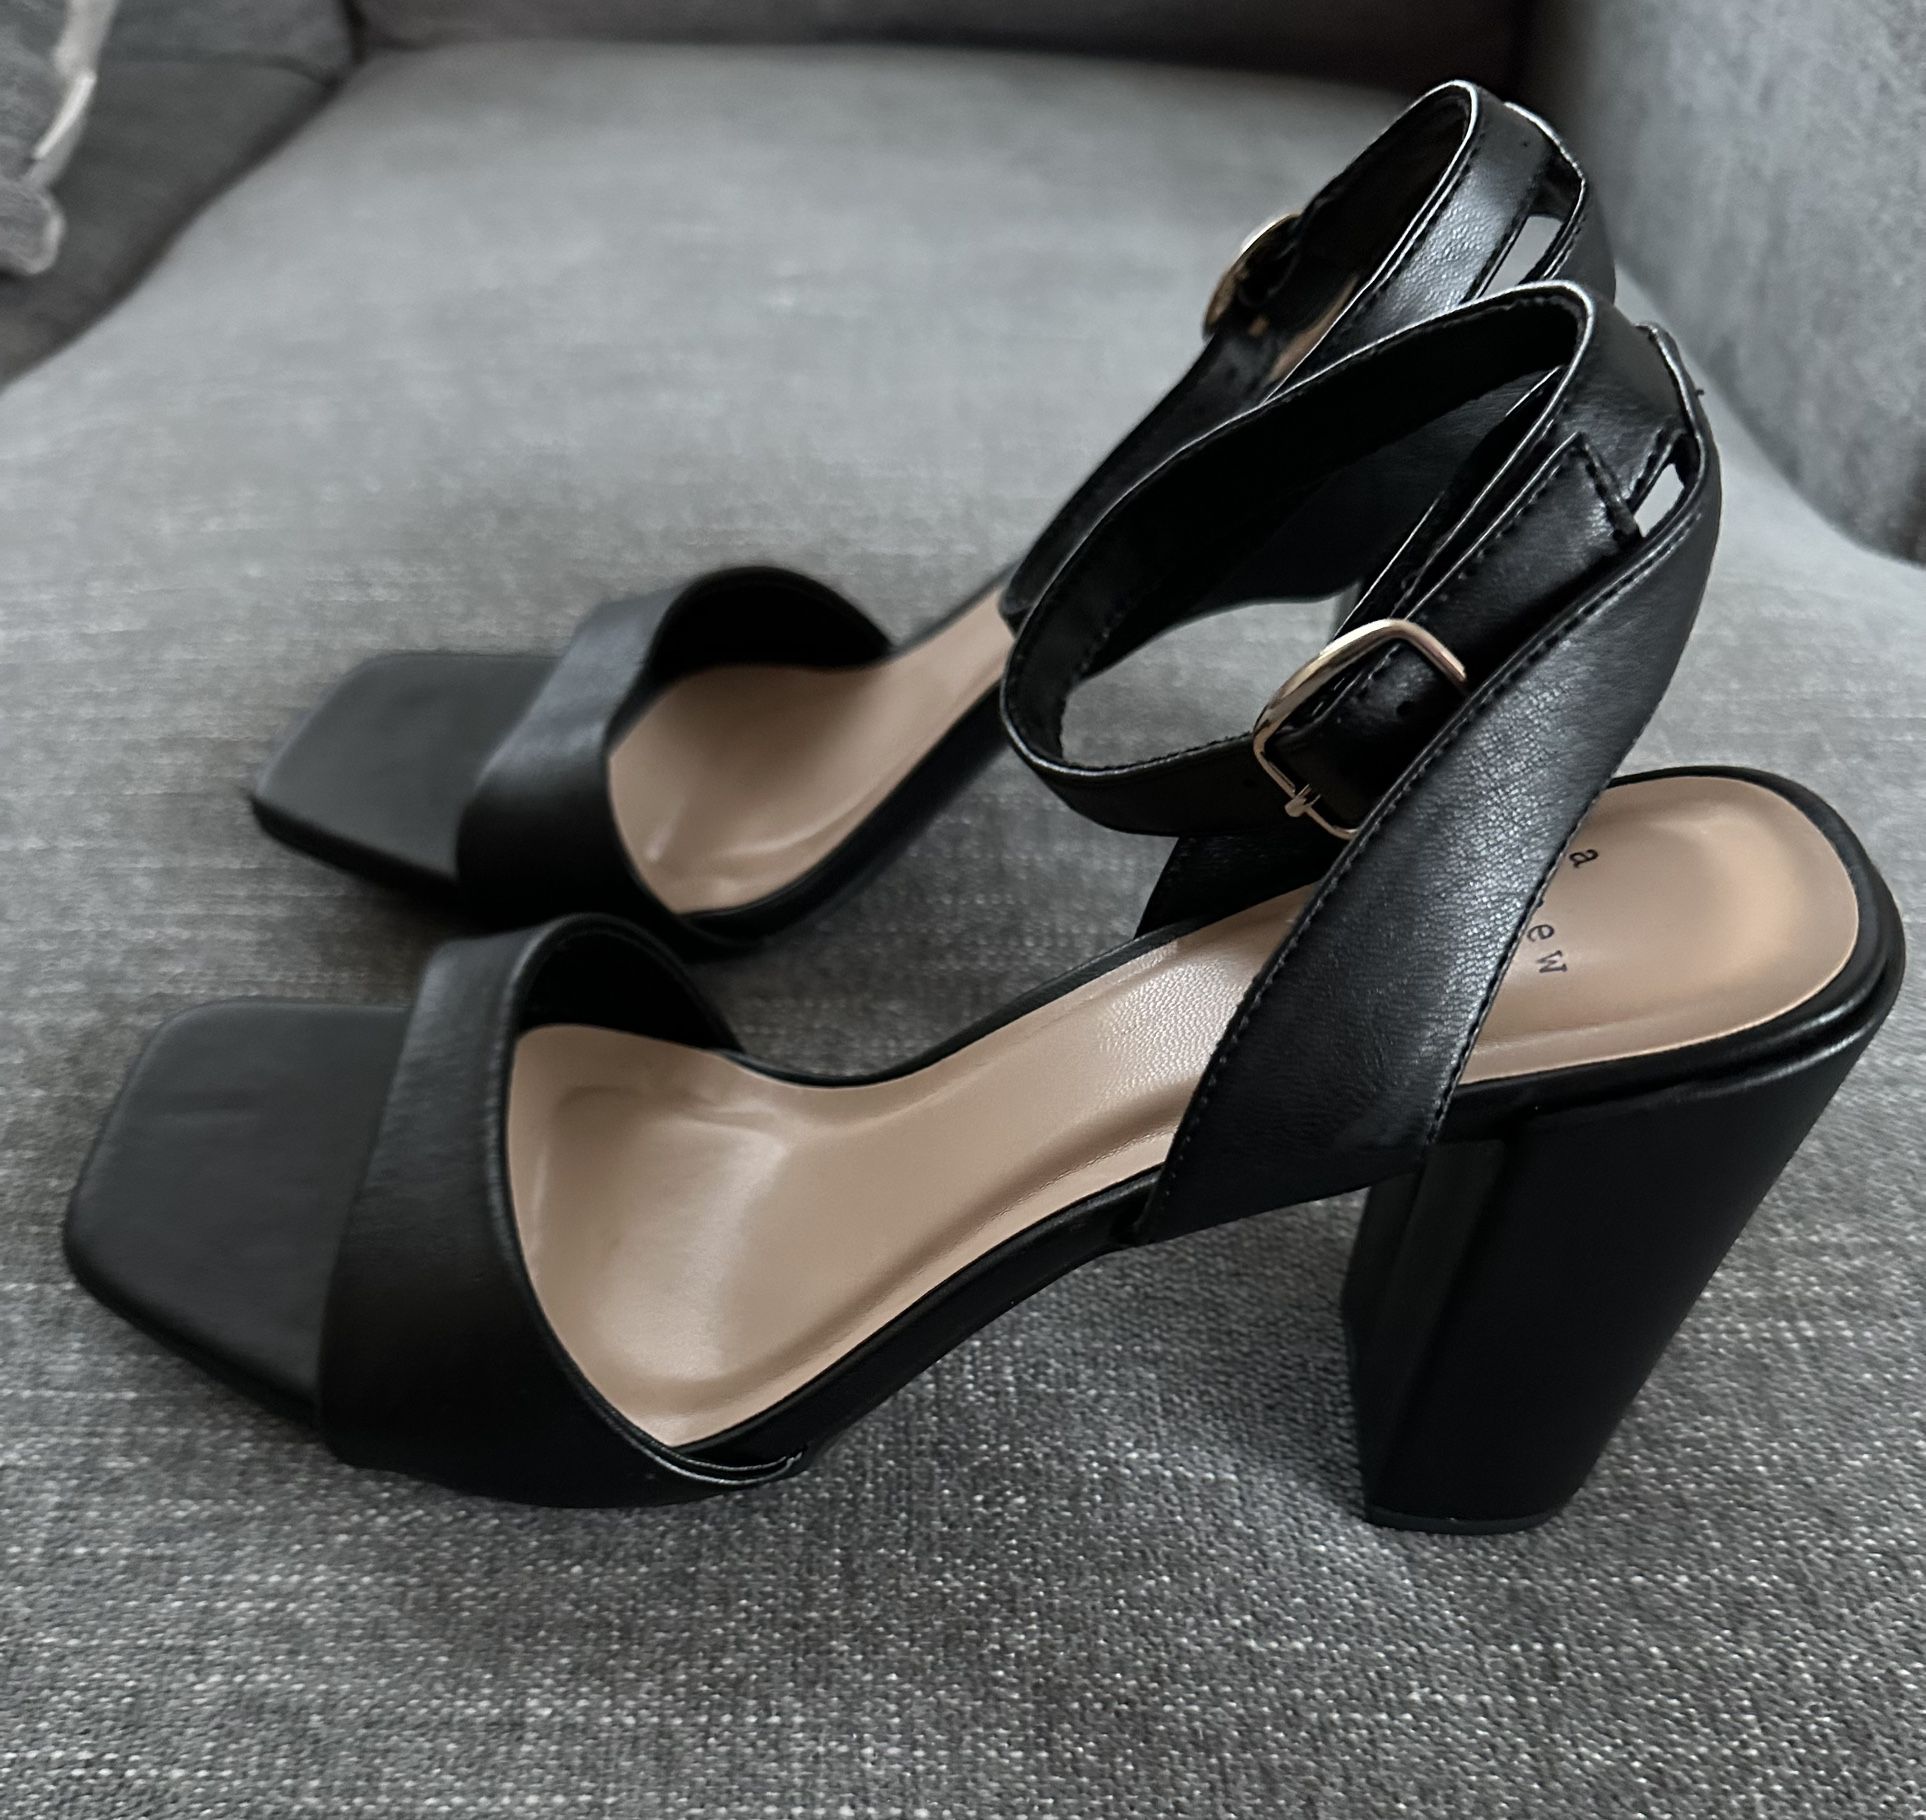  Black Heels 